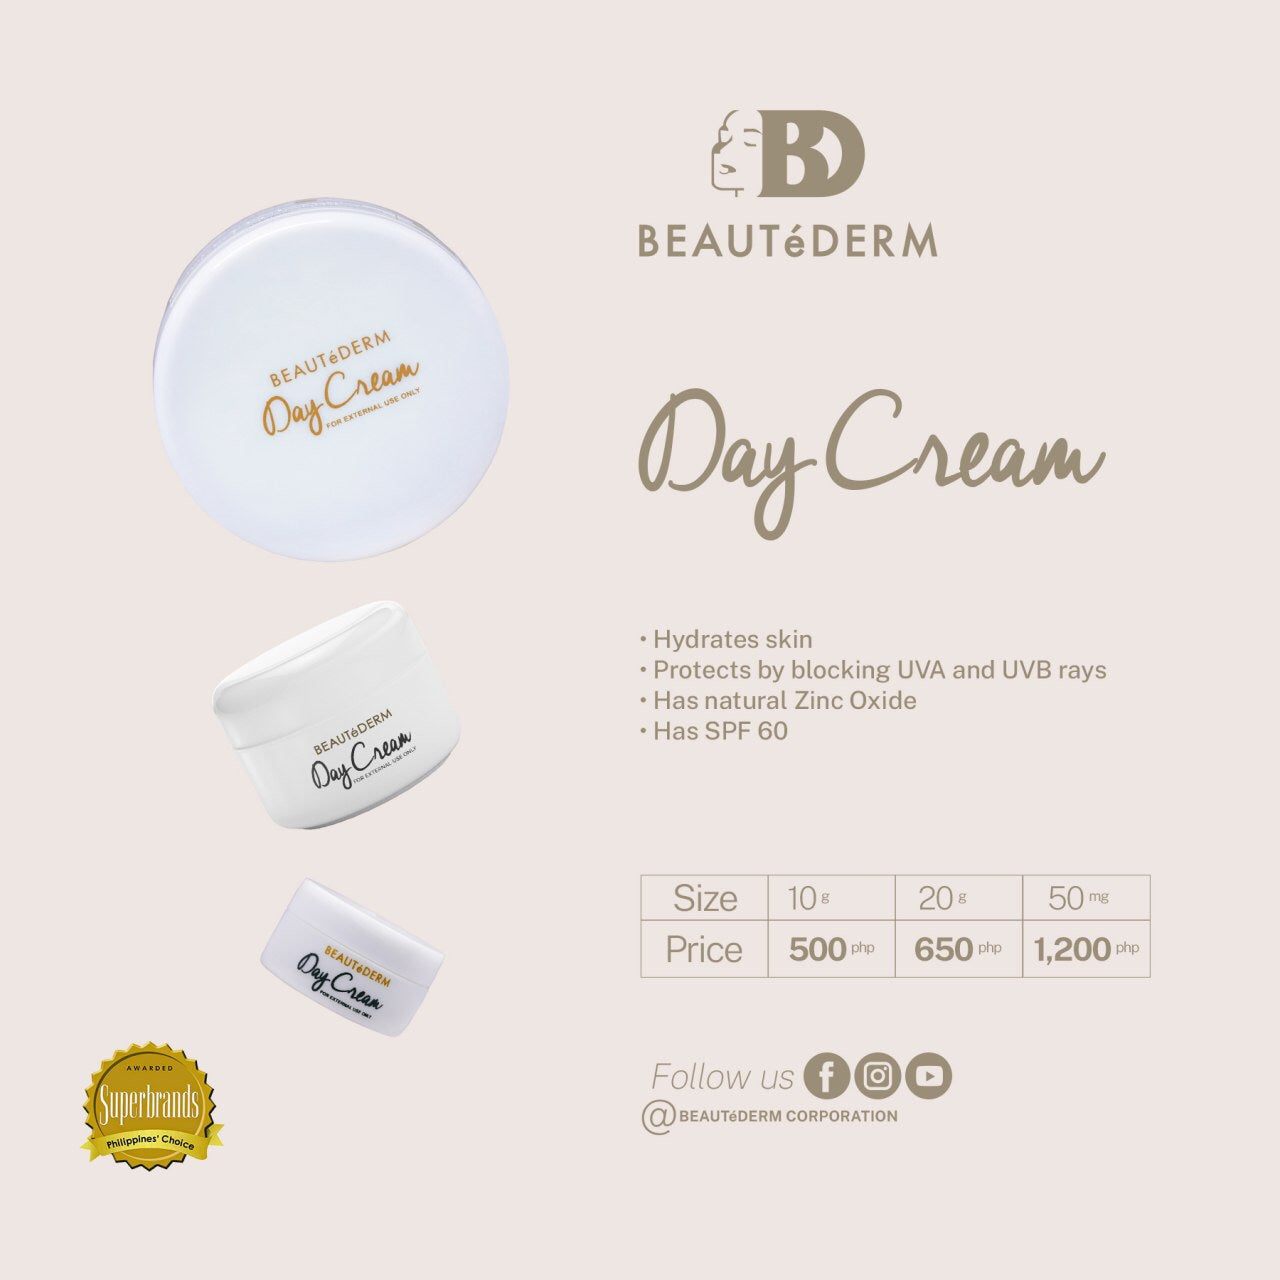 Buy 1 Take 1 Day Cream 20g (SPF 50+)